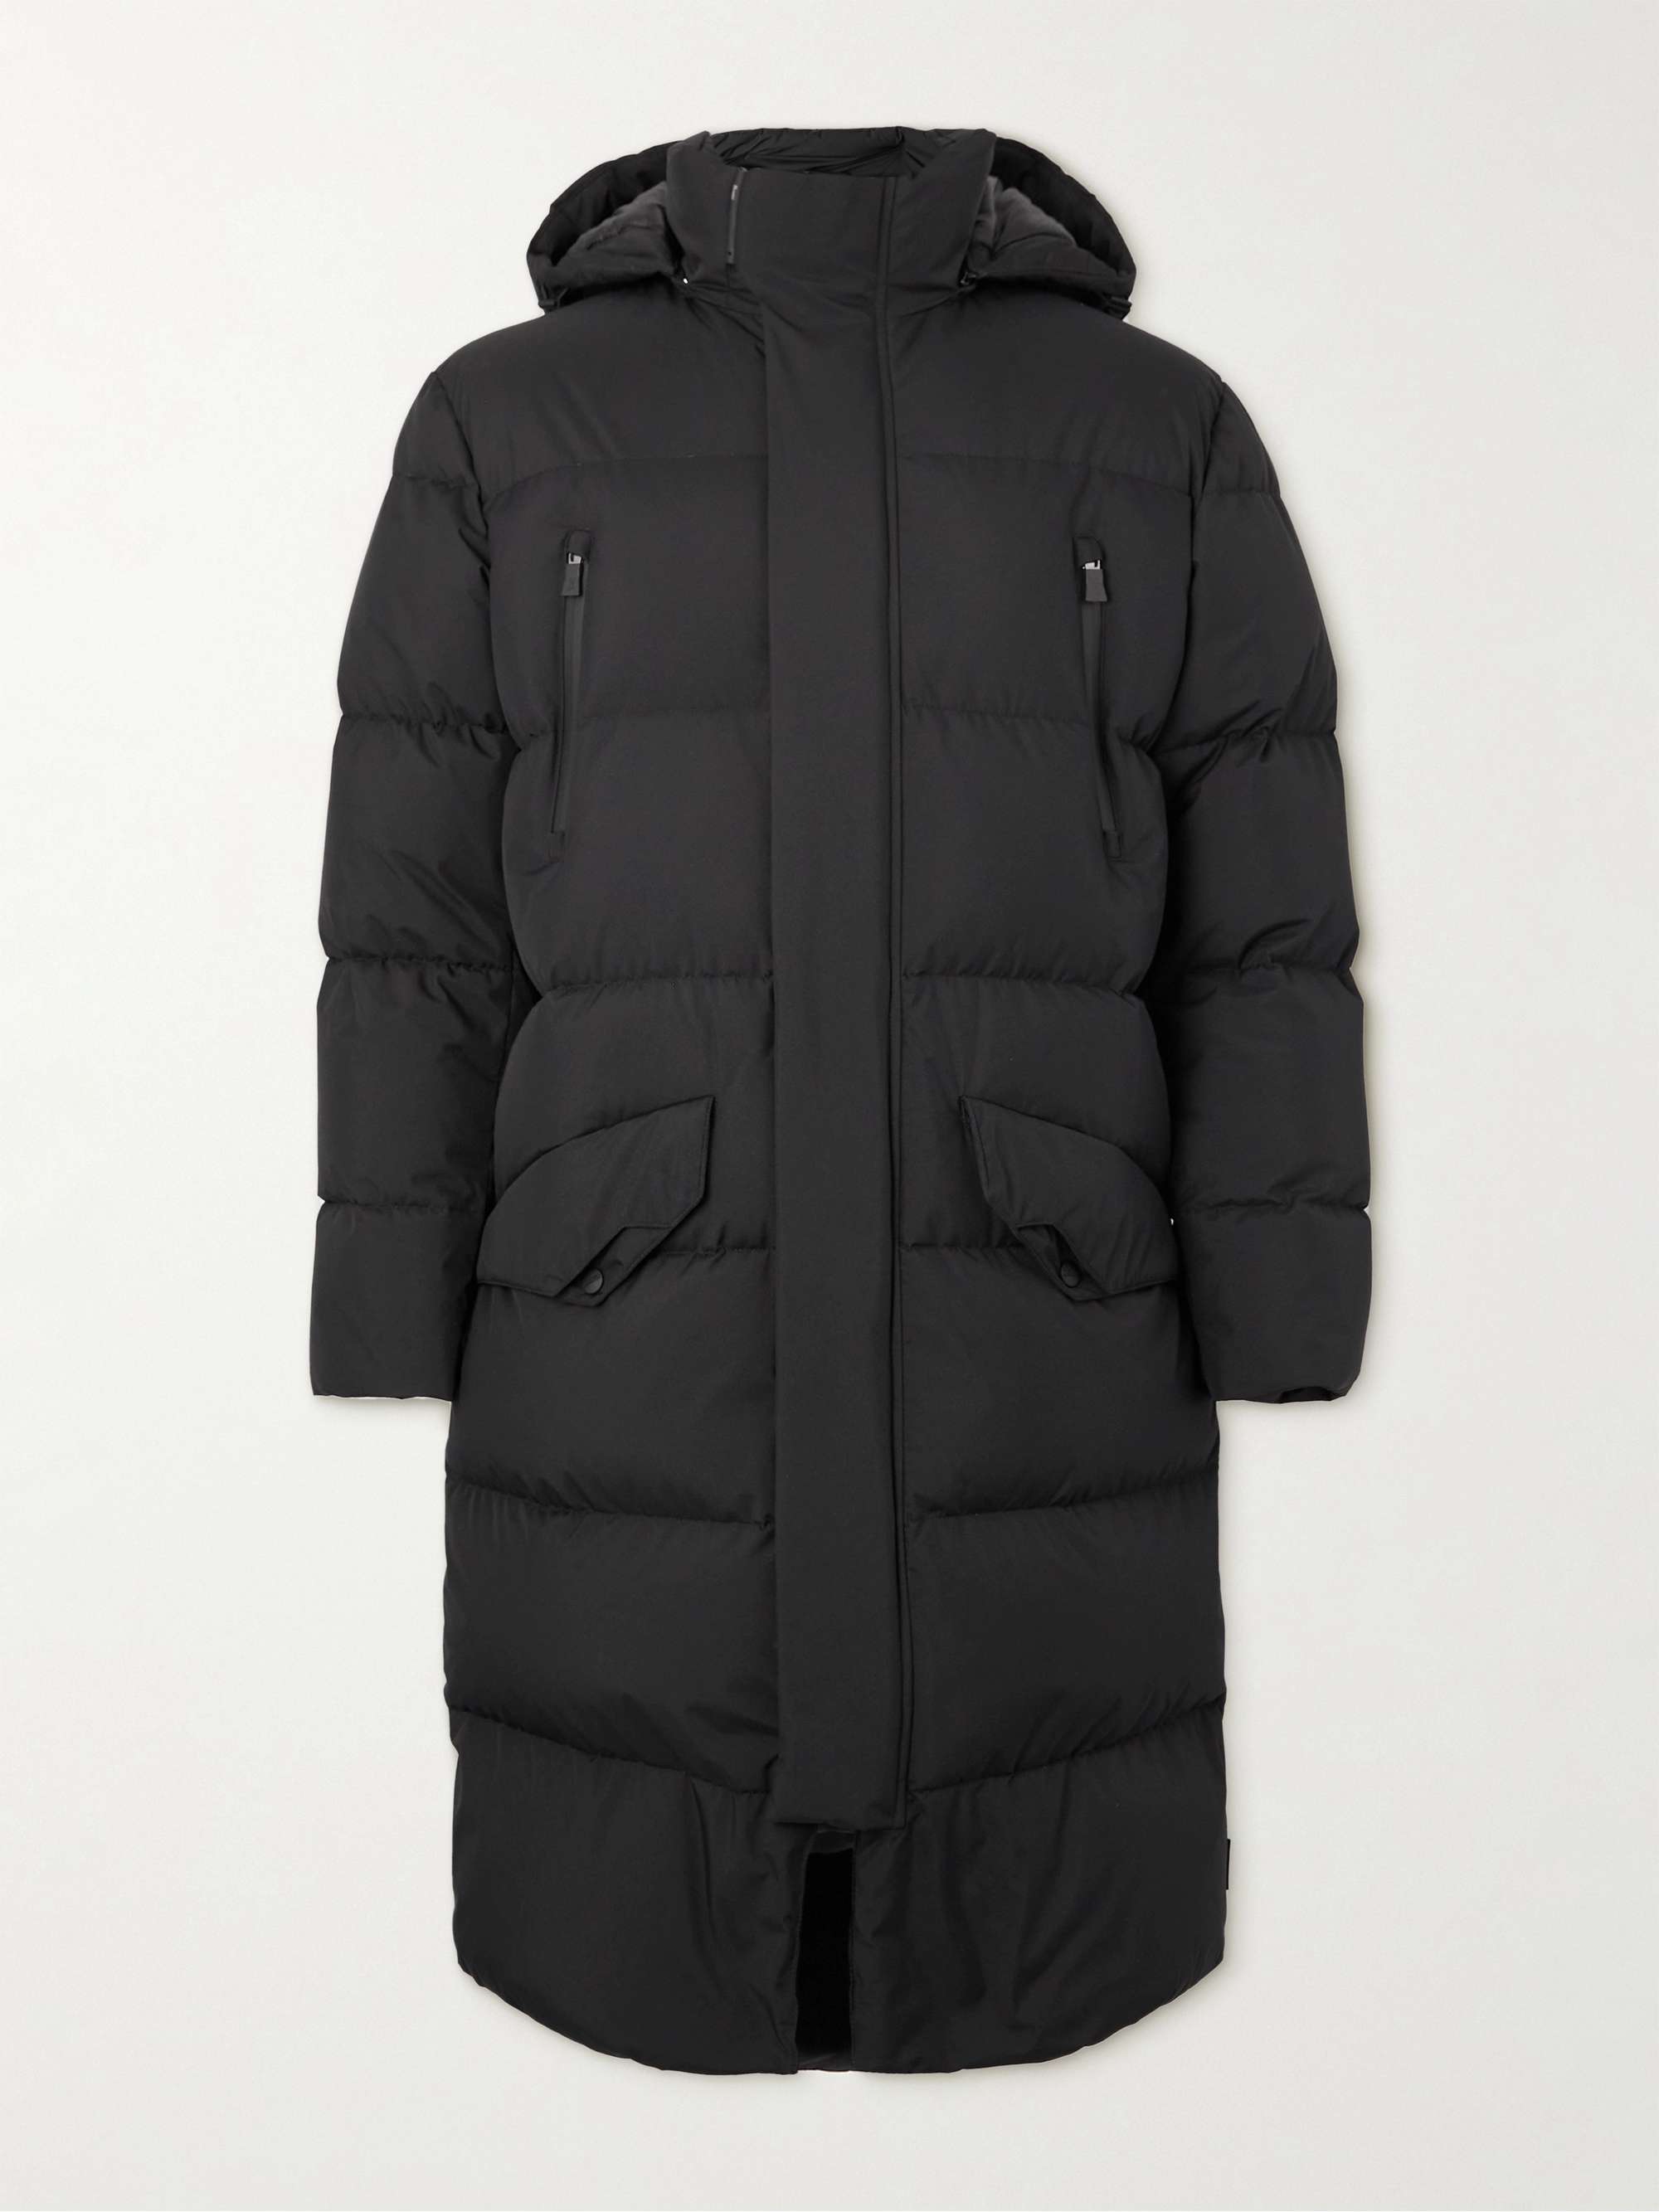 Black Quilted Shell Hooded Jacket | HERNO LAMINAR | MR PORTER